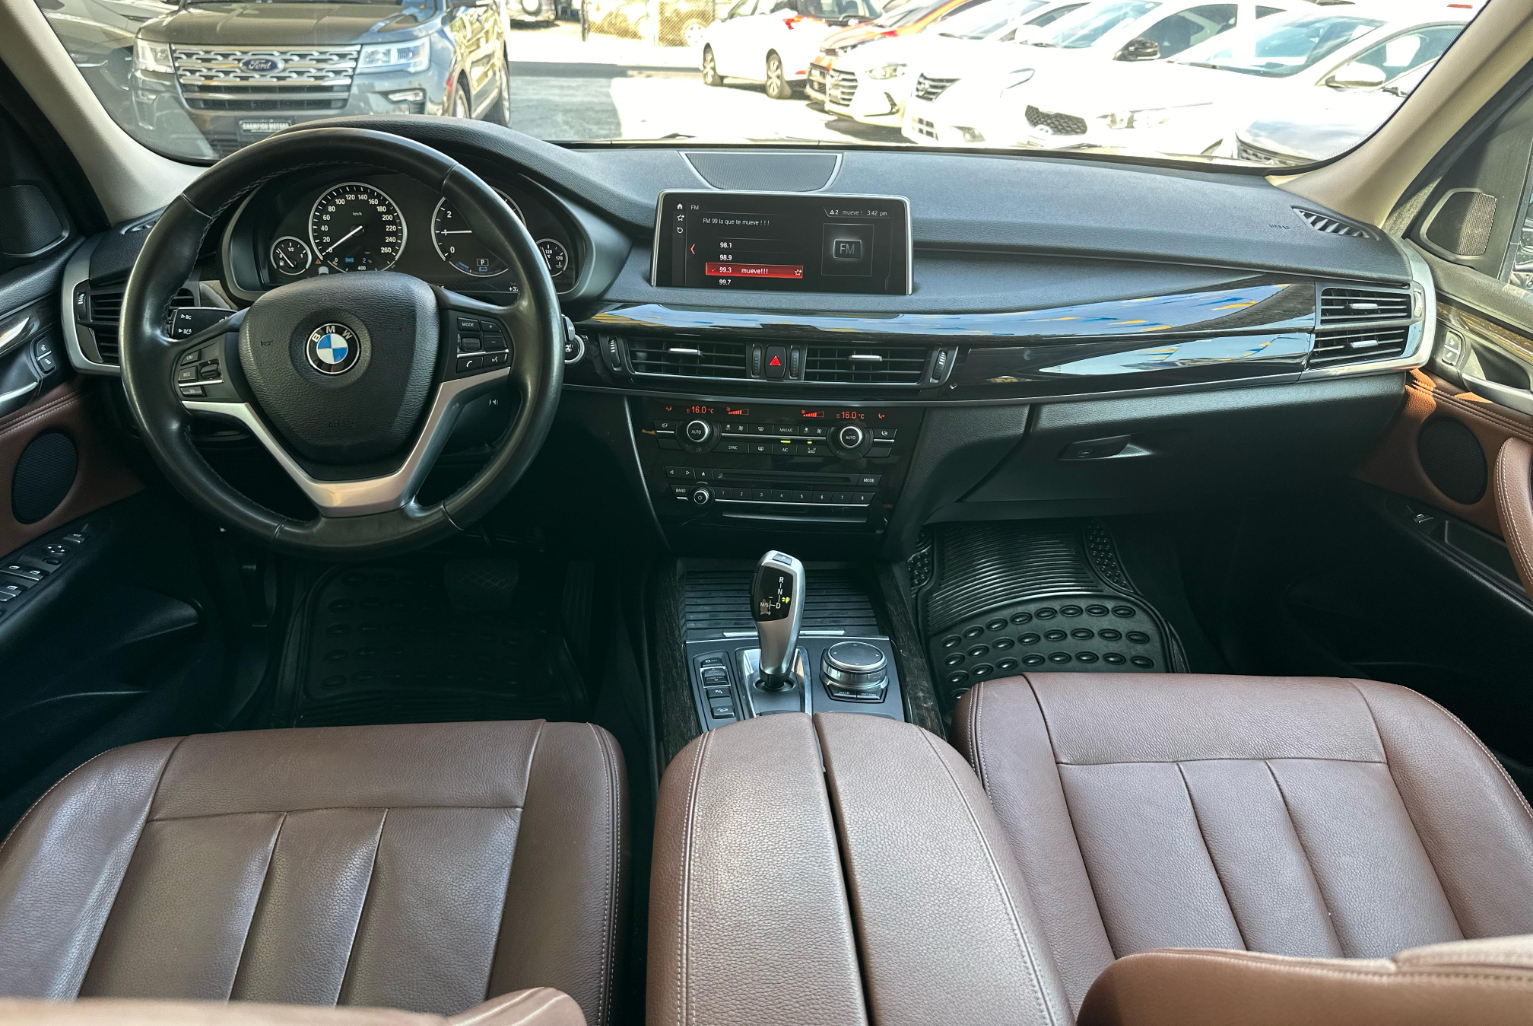 BMW X5 eDrive 2018 Automático color Negro, Imagen #9